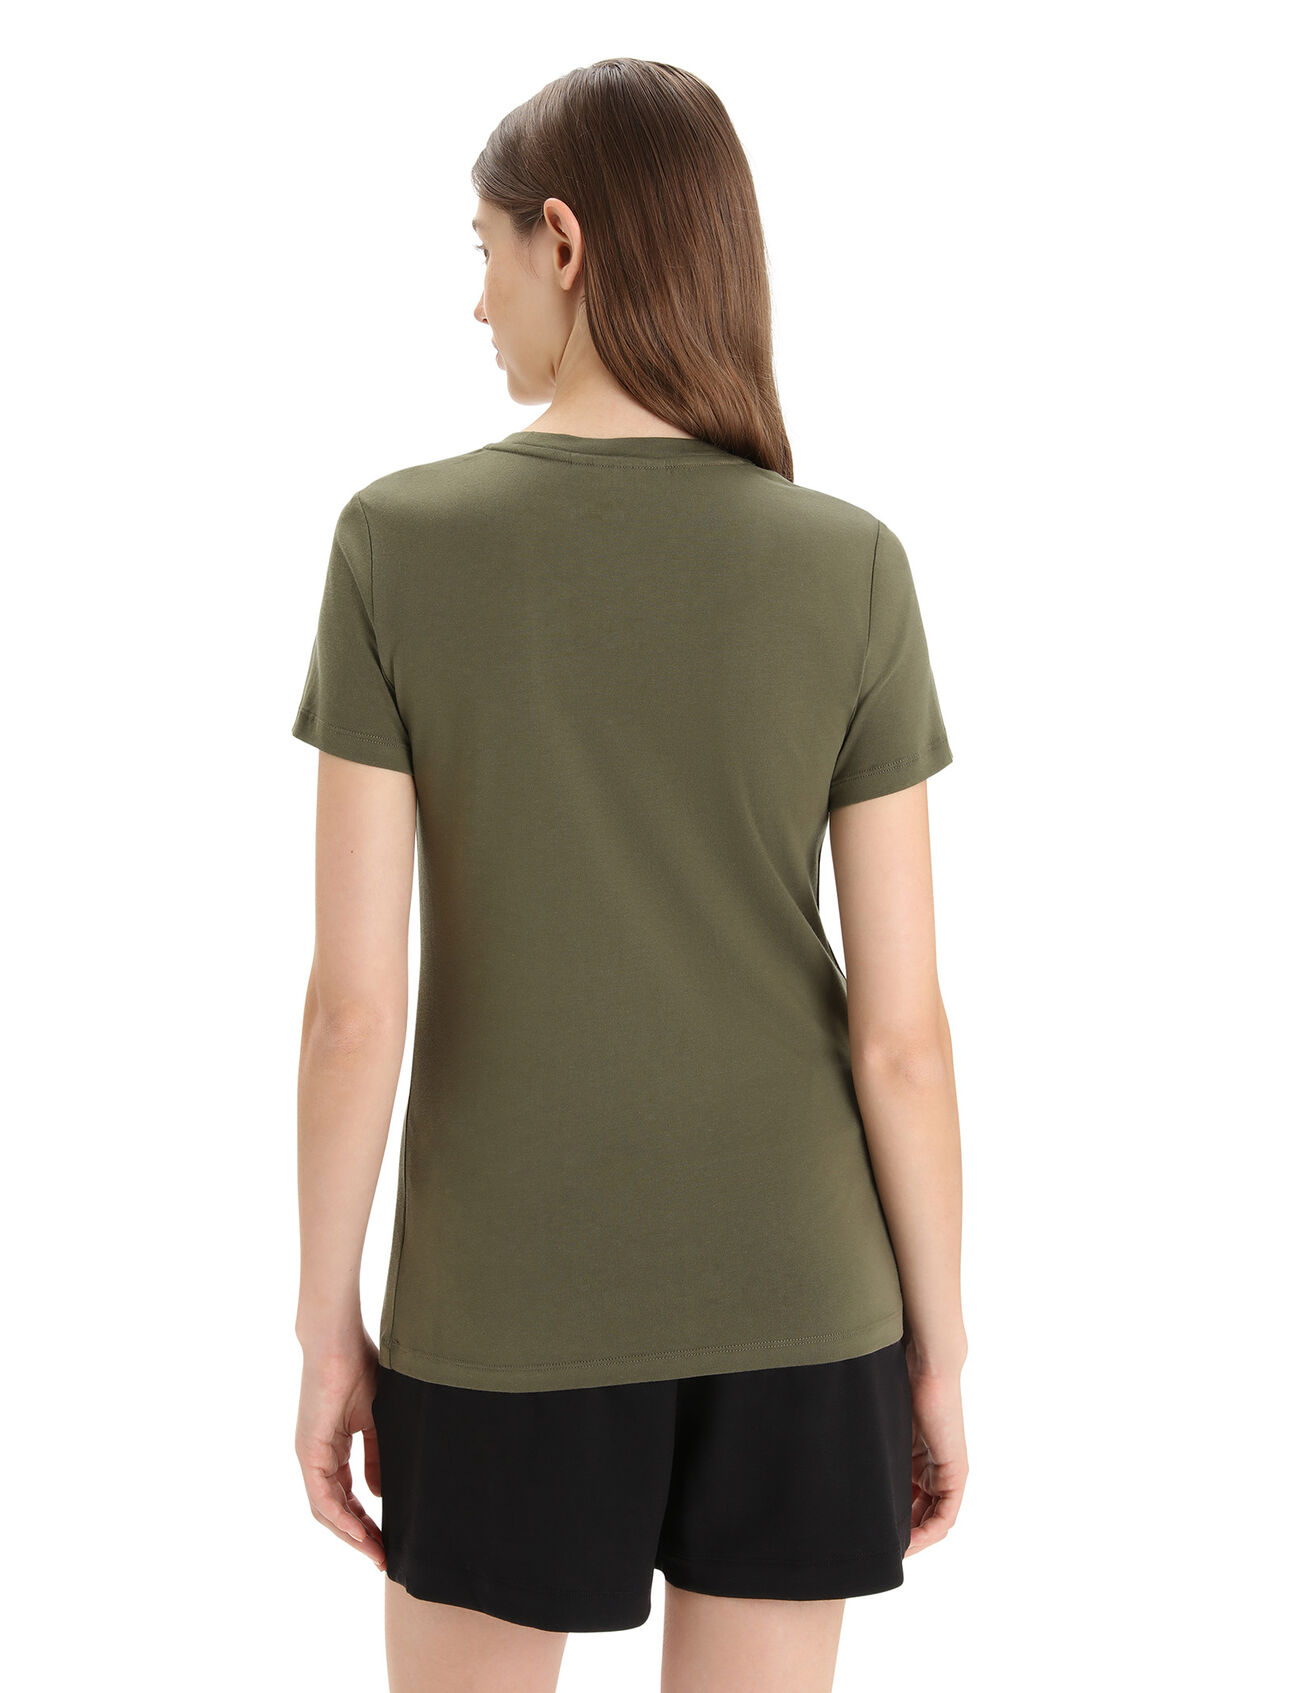 Shop Sustainable Women's Short Sleeve T-Shirts